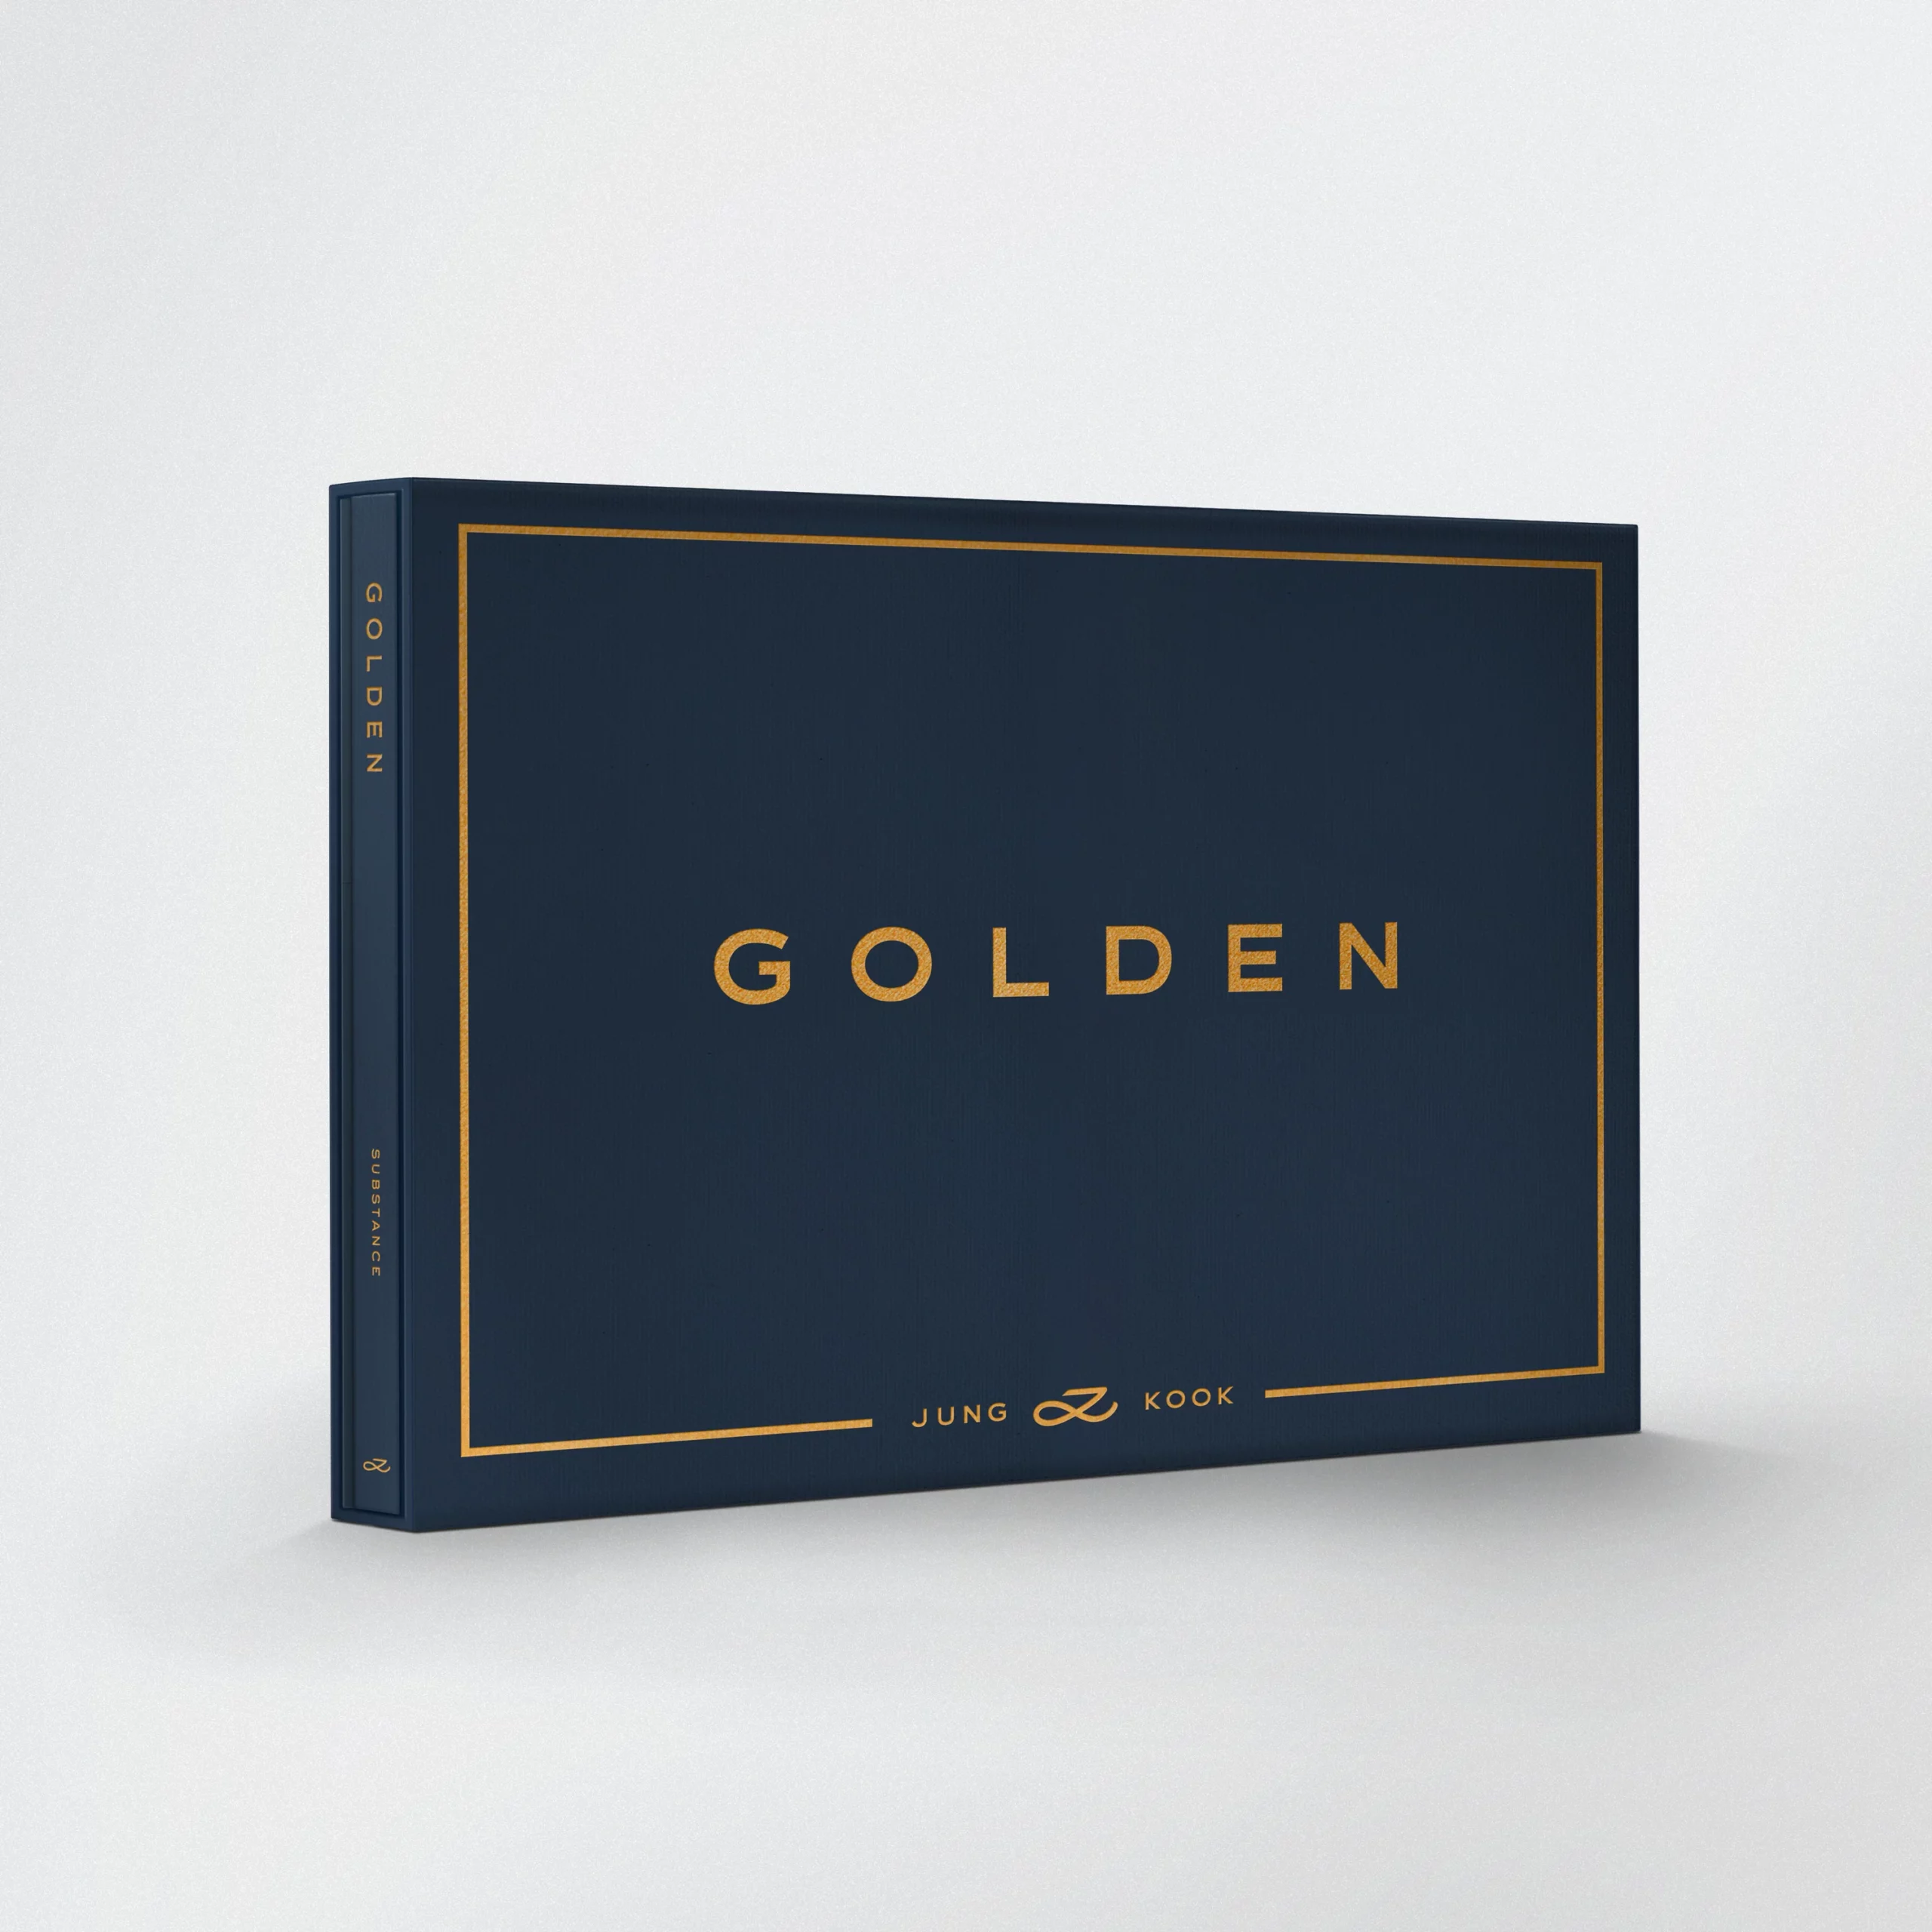 Jungkook Golden Album